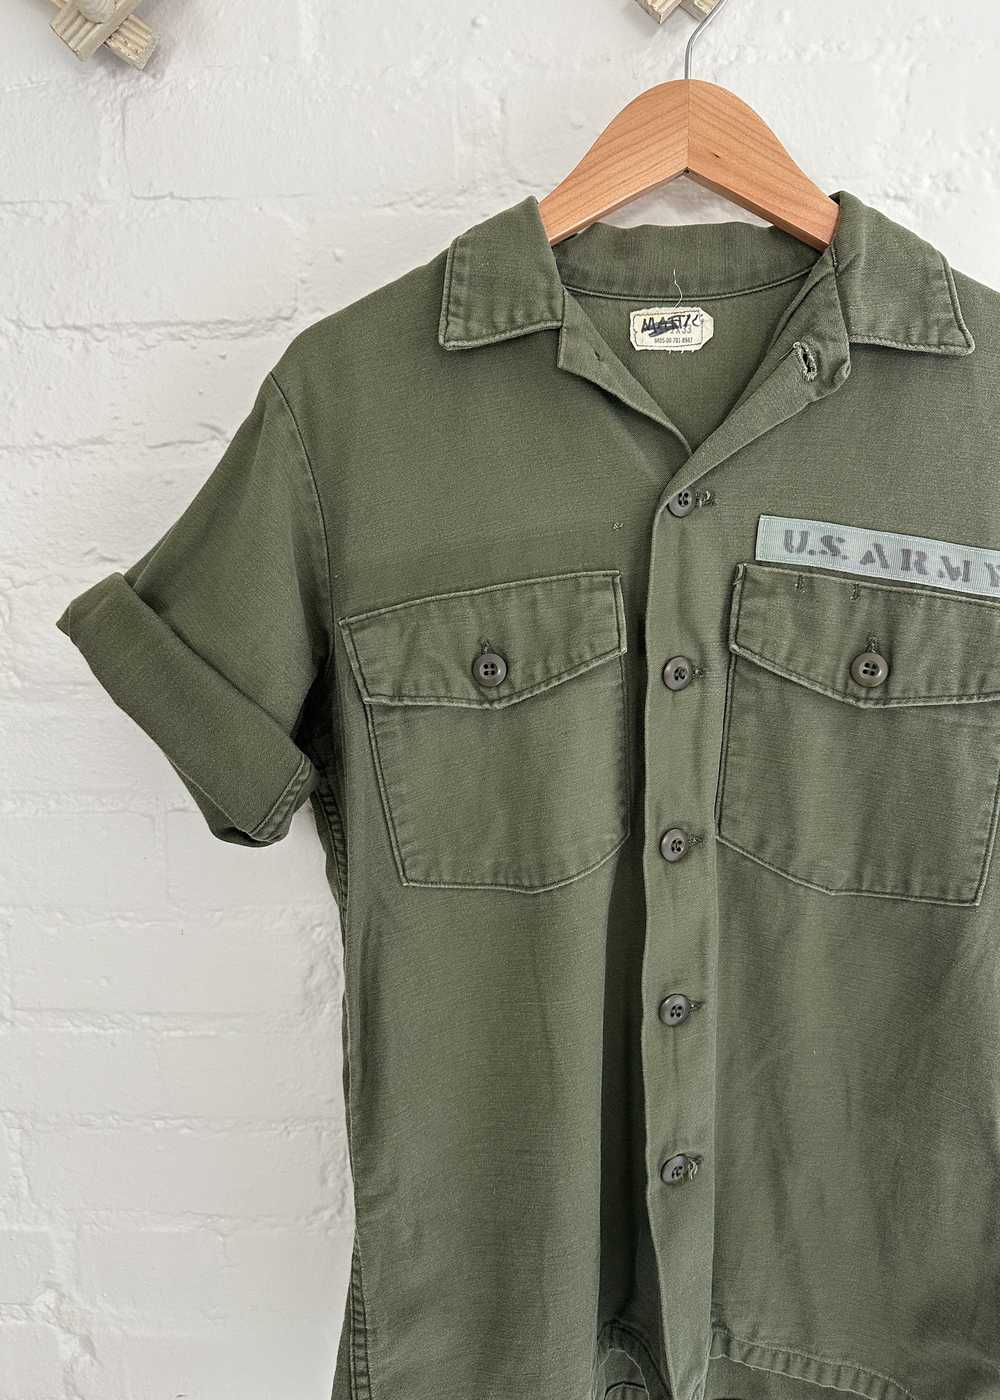 Vintage 1970s Short Sleeve Army Jacket - image 3